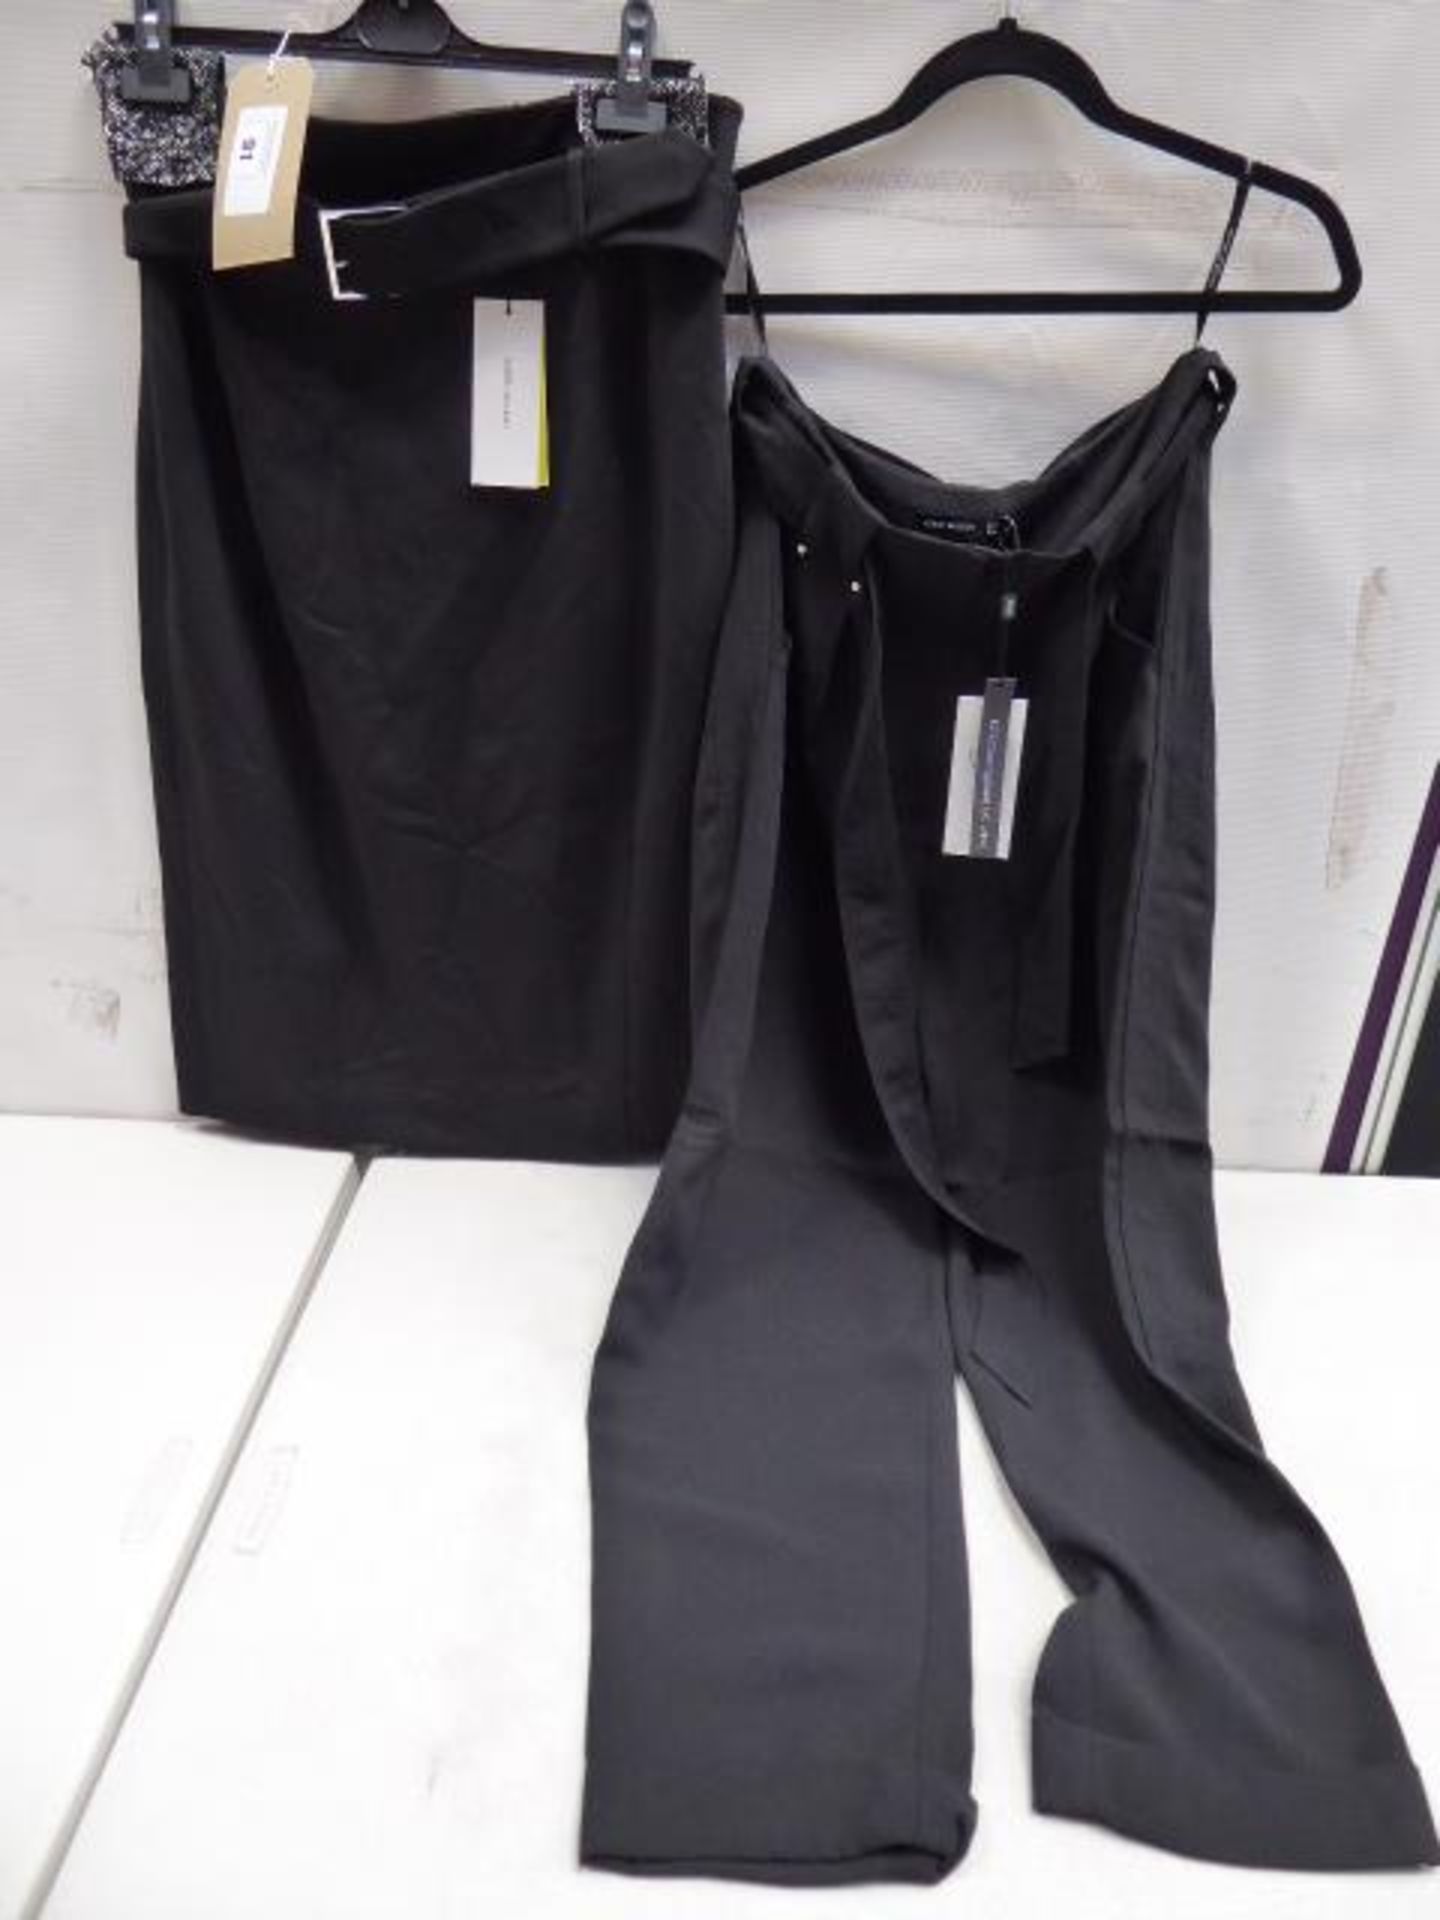 Karen Millen black pencil skirt size 14 and Karen Millen black utility trouser size 12